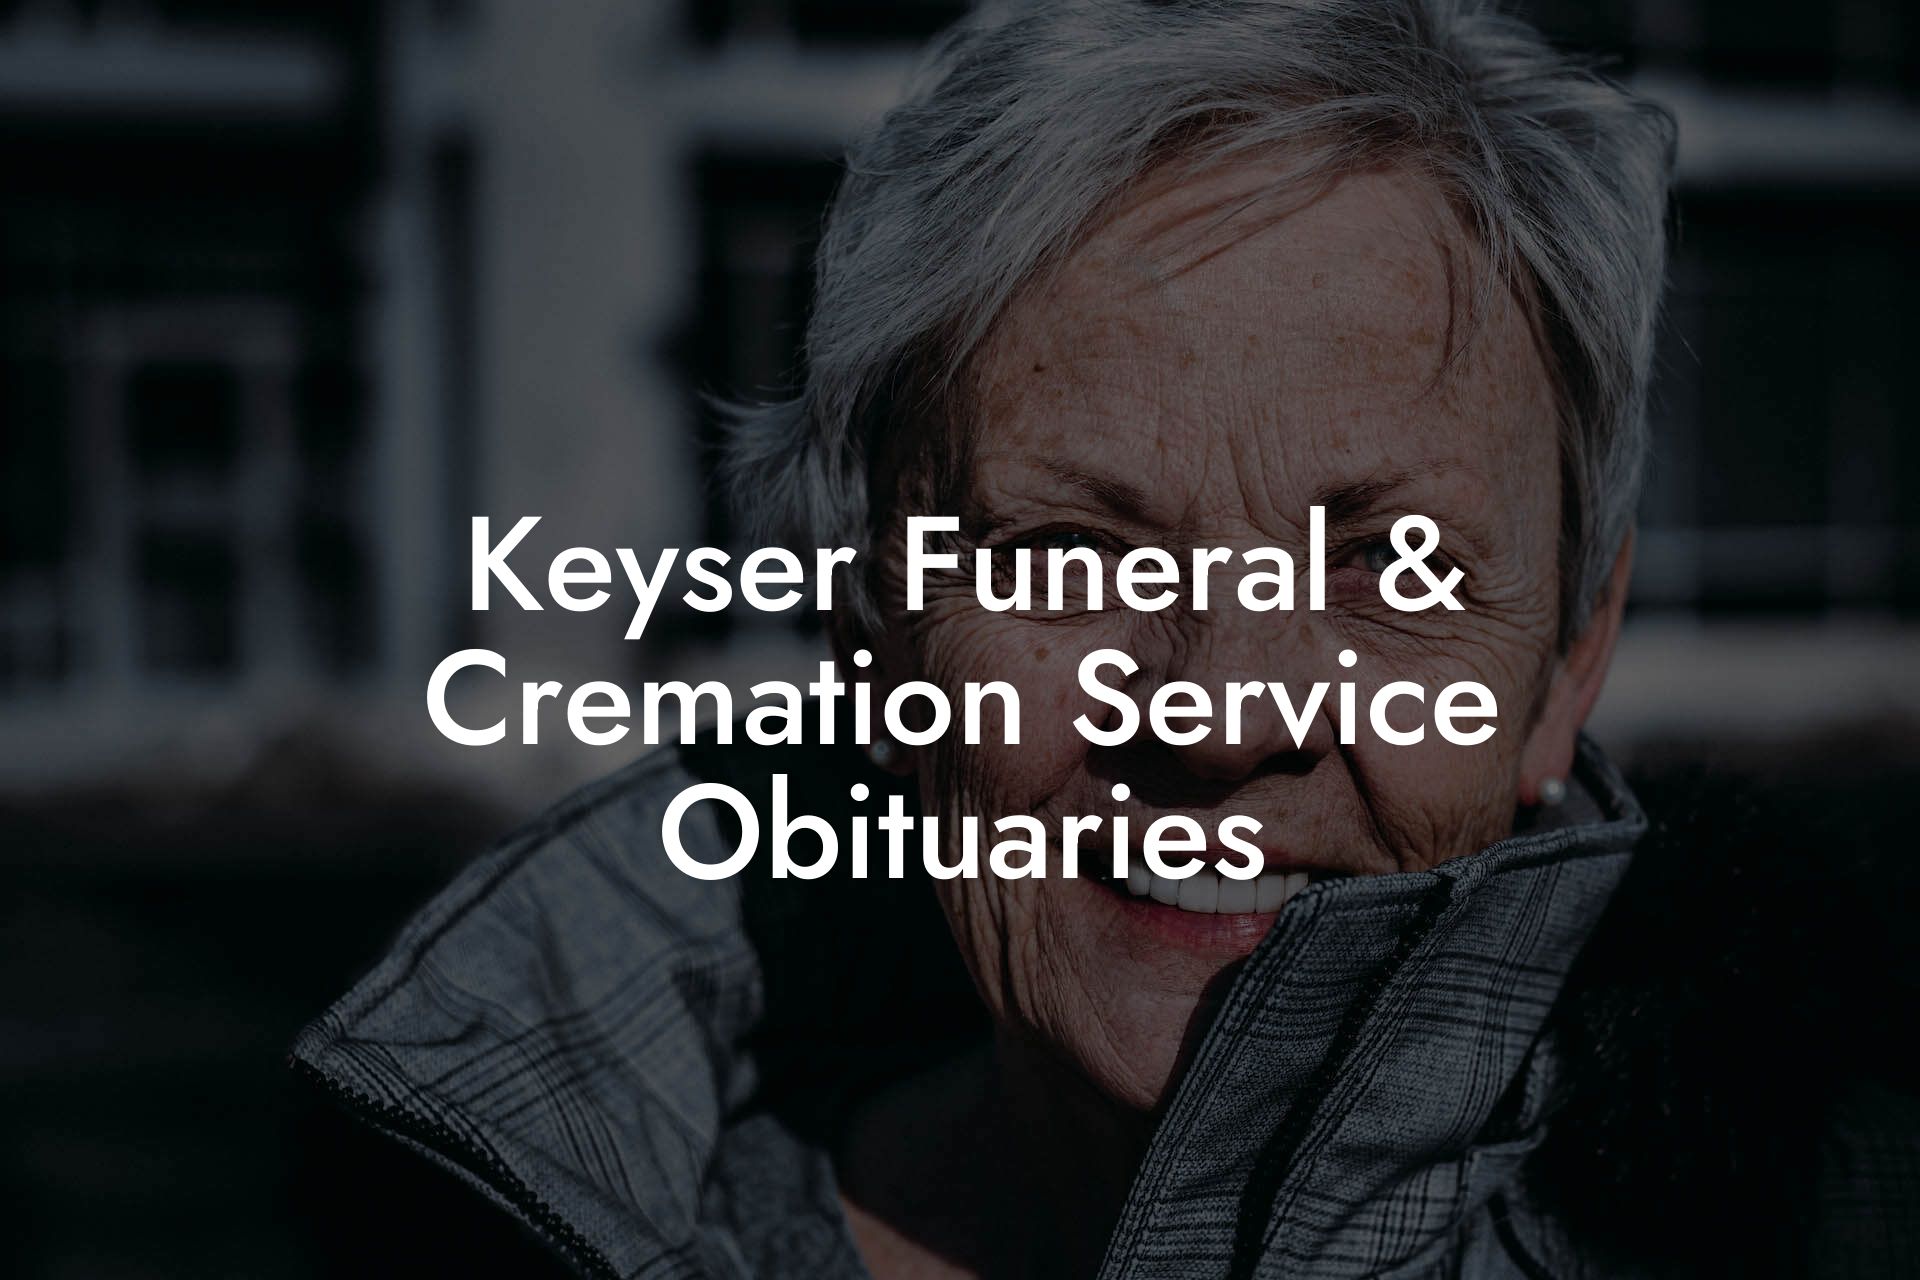 Keyser Funeral & Cremation Service Obituaries